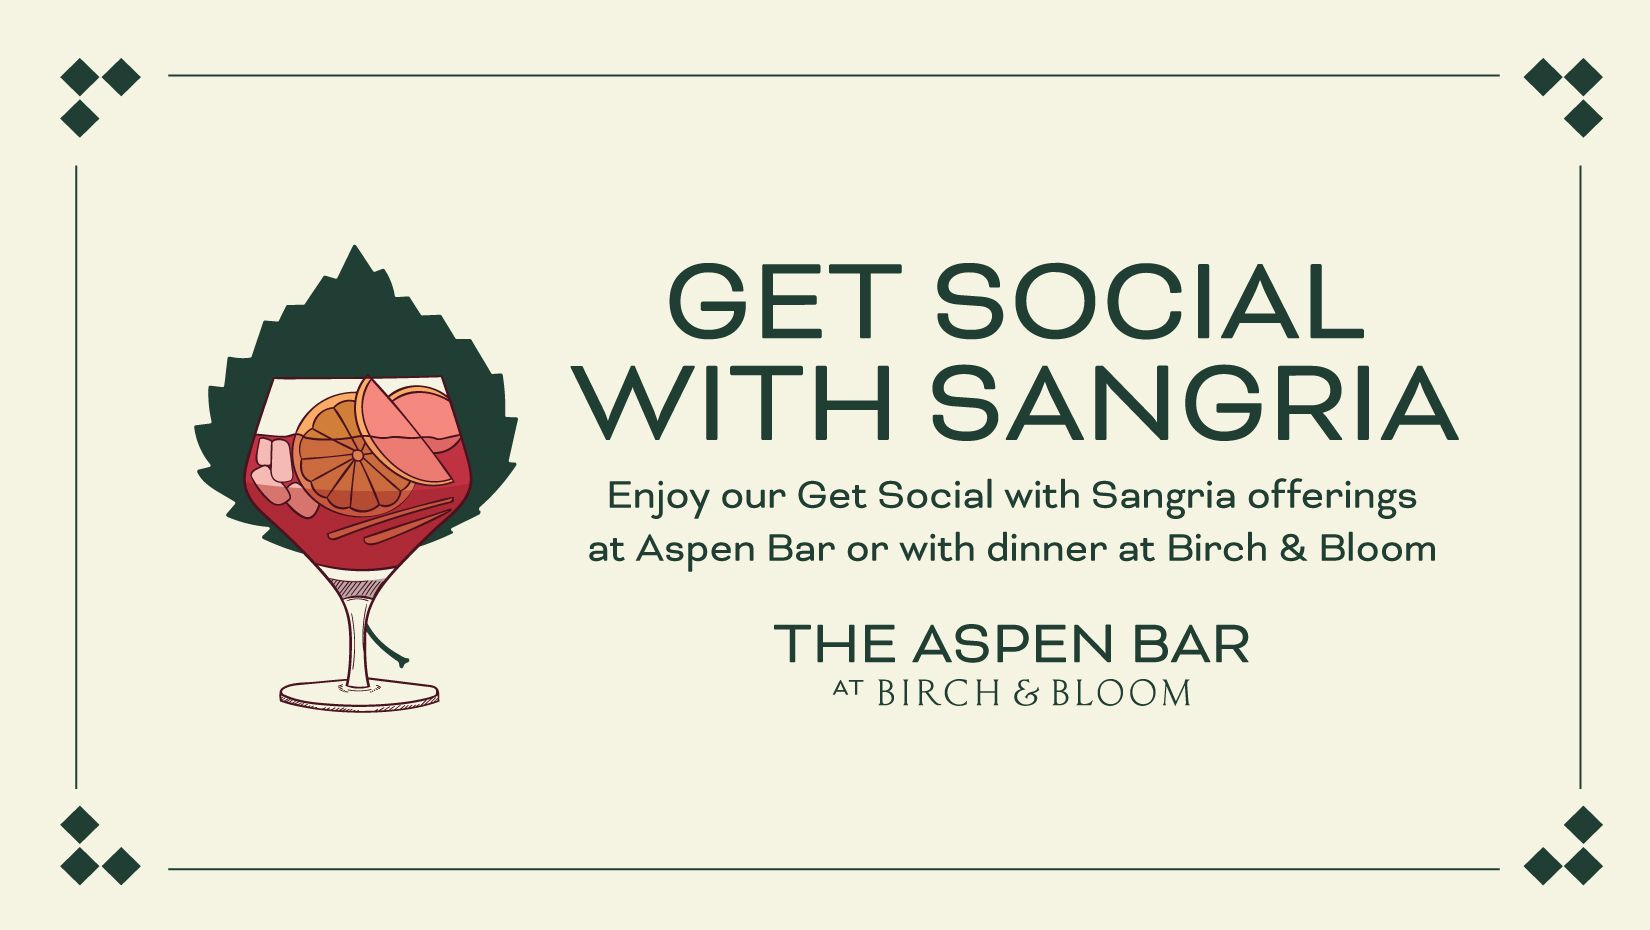 Get Social with Sangria event